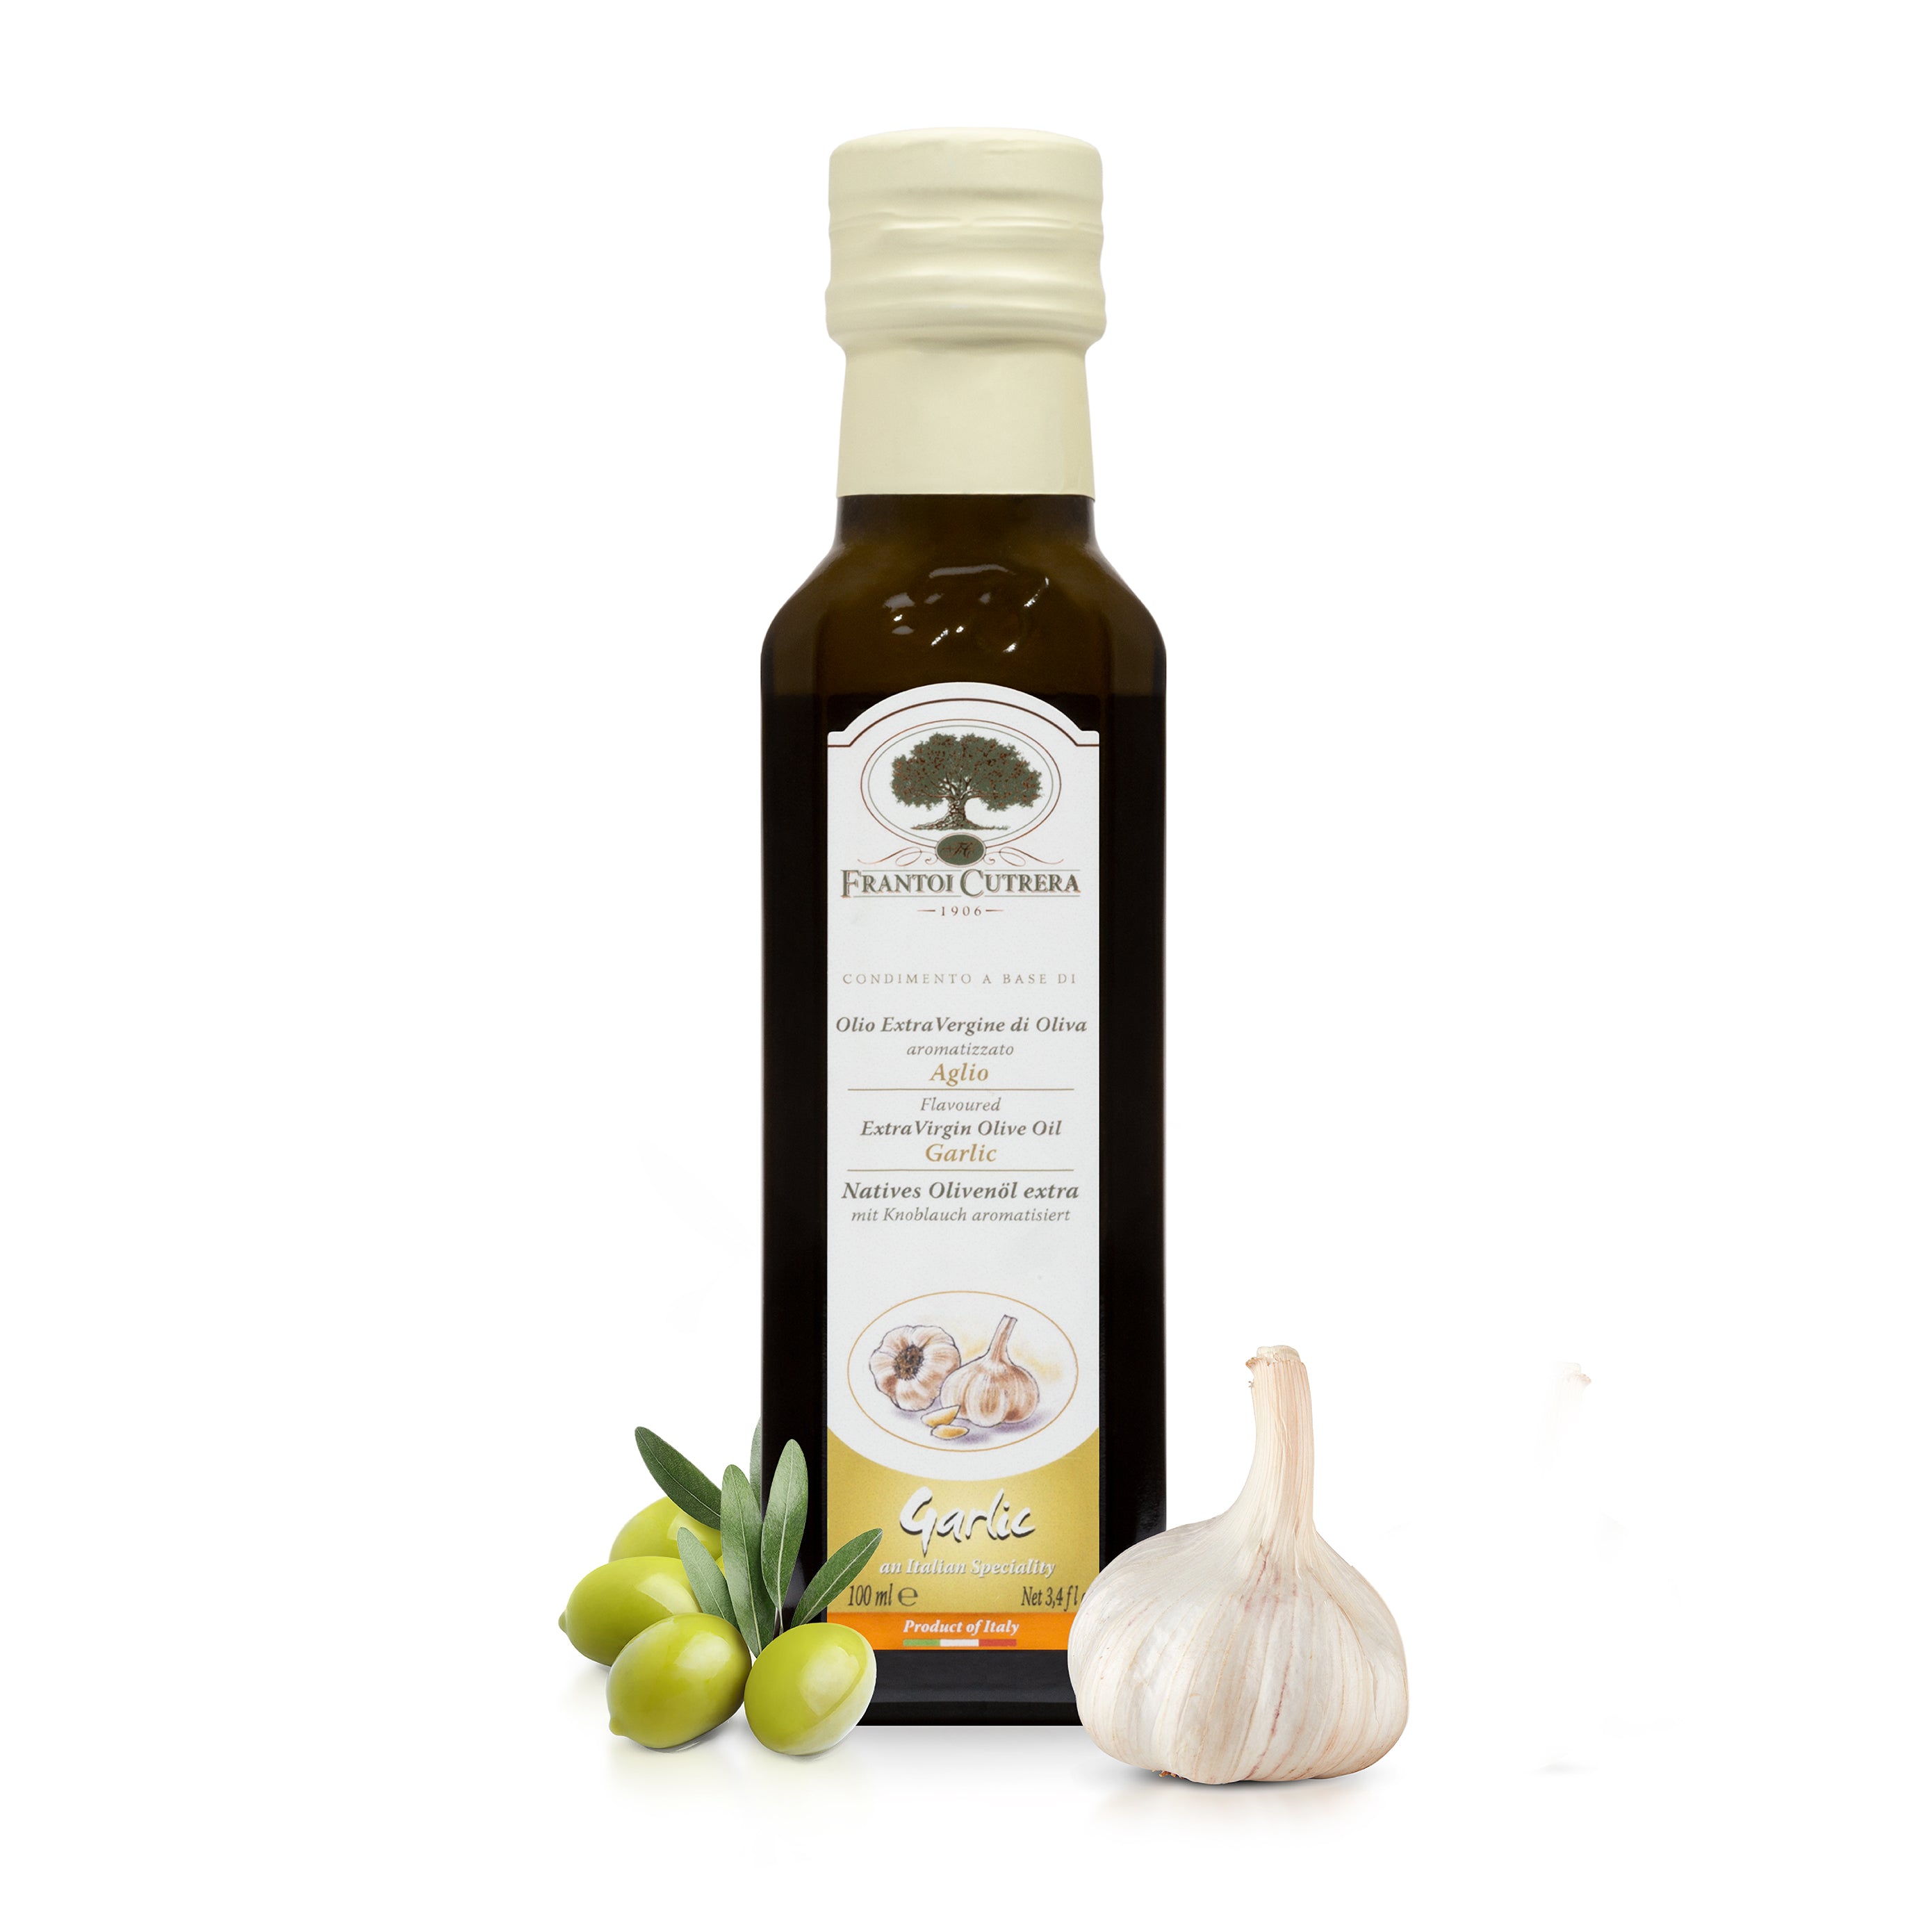 Garlic Infused Olive Oil by Frantoi Cutrera